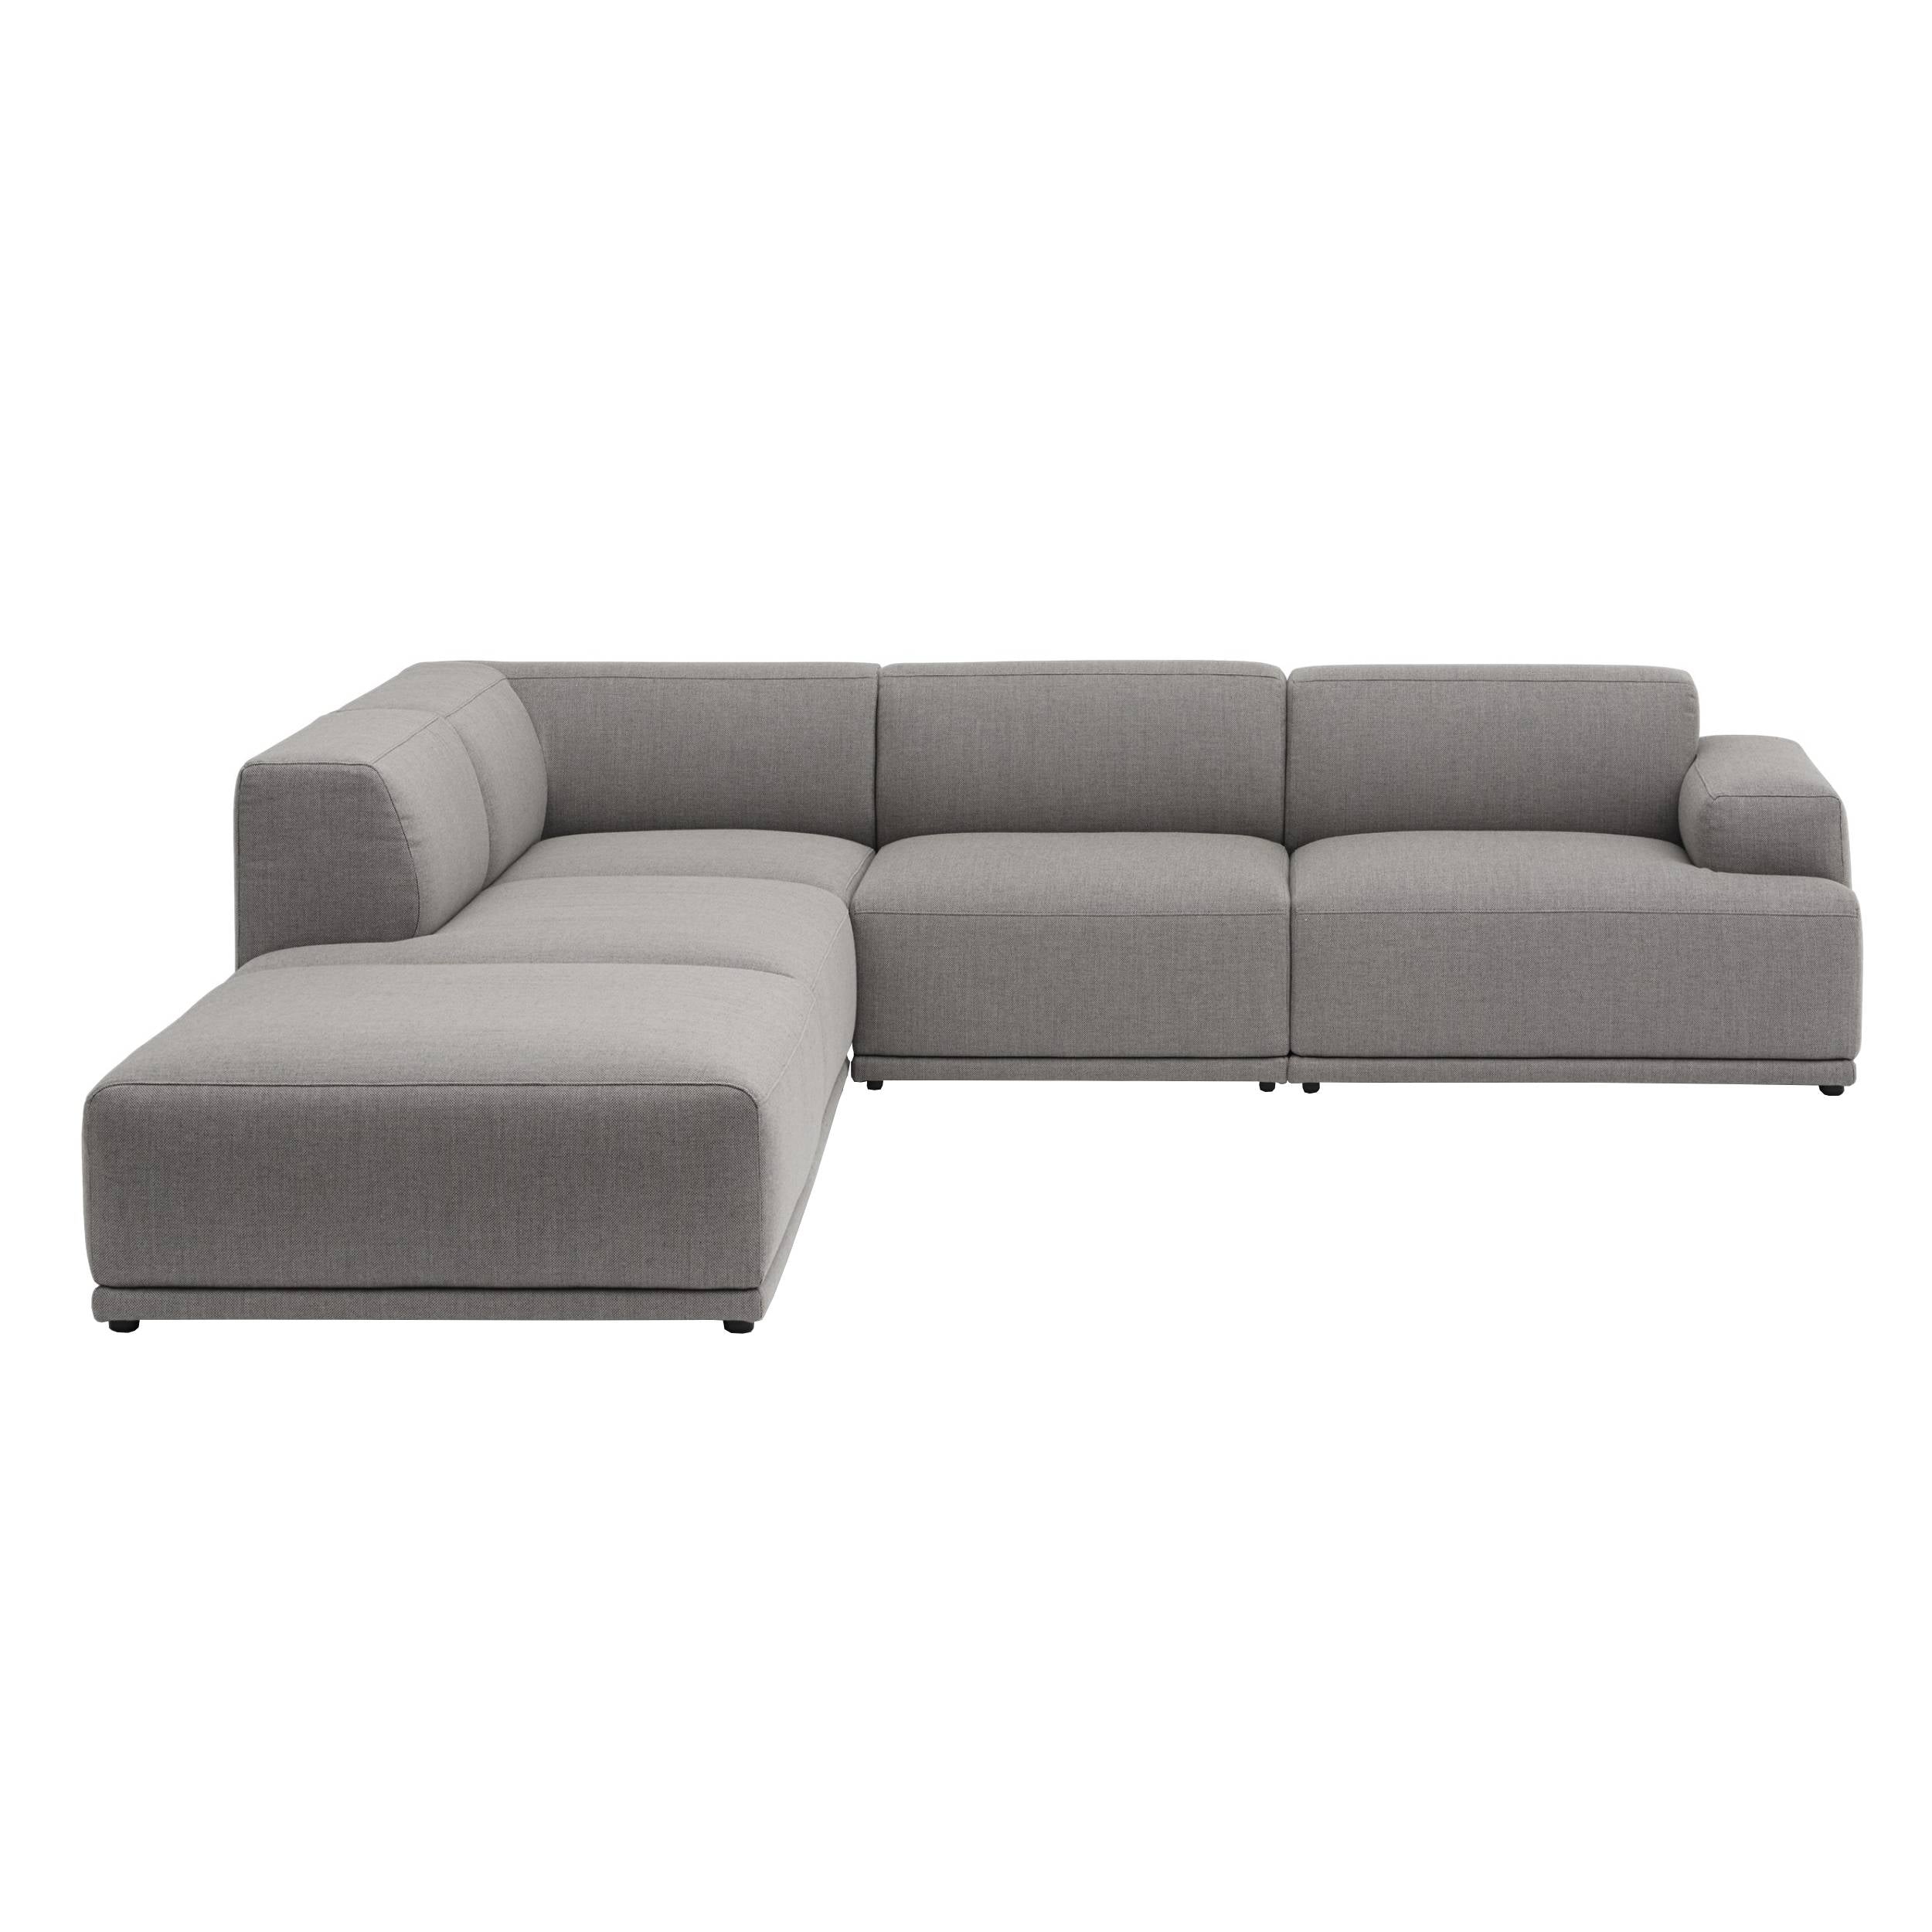 Hoeveelheid geld nicht publiek Connect Soft Modular Sofa: Corner - Quick Ship | Buy Muuto online at A+R